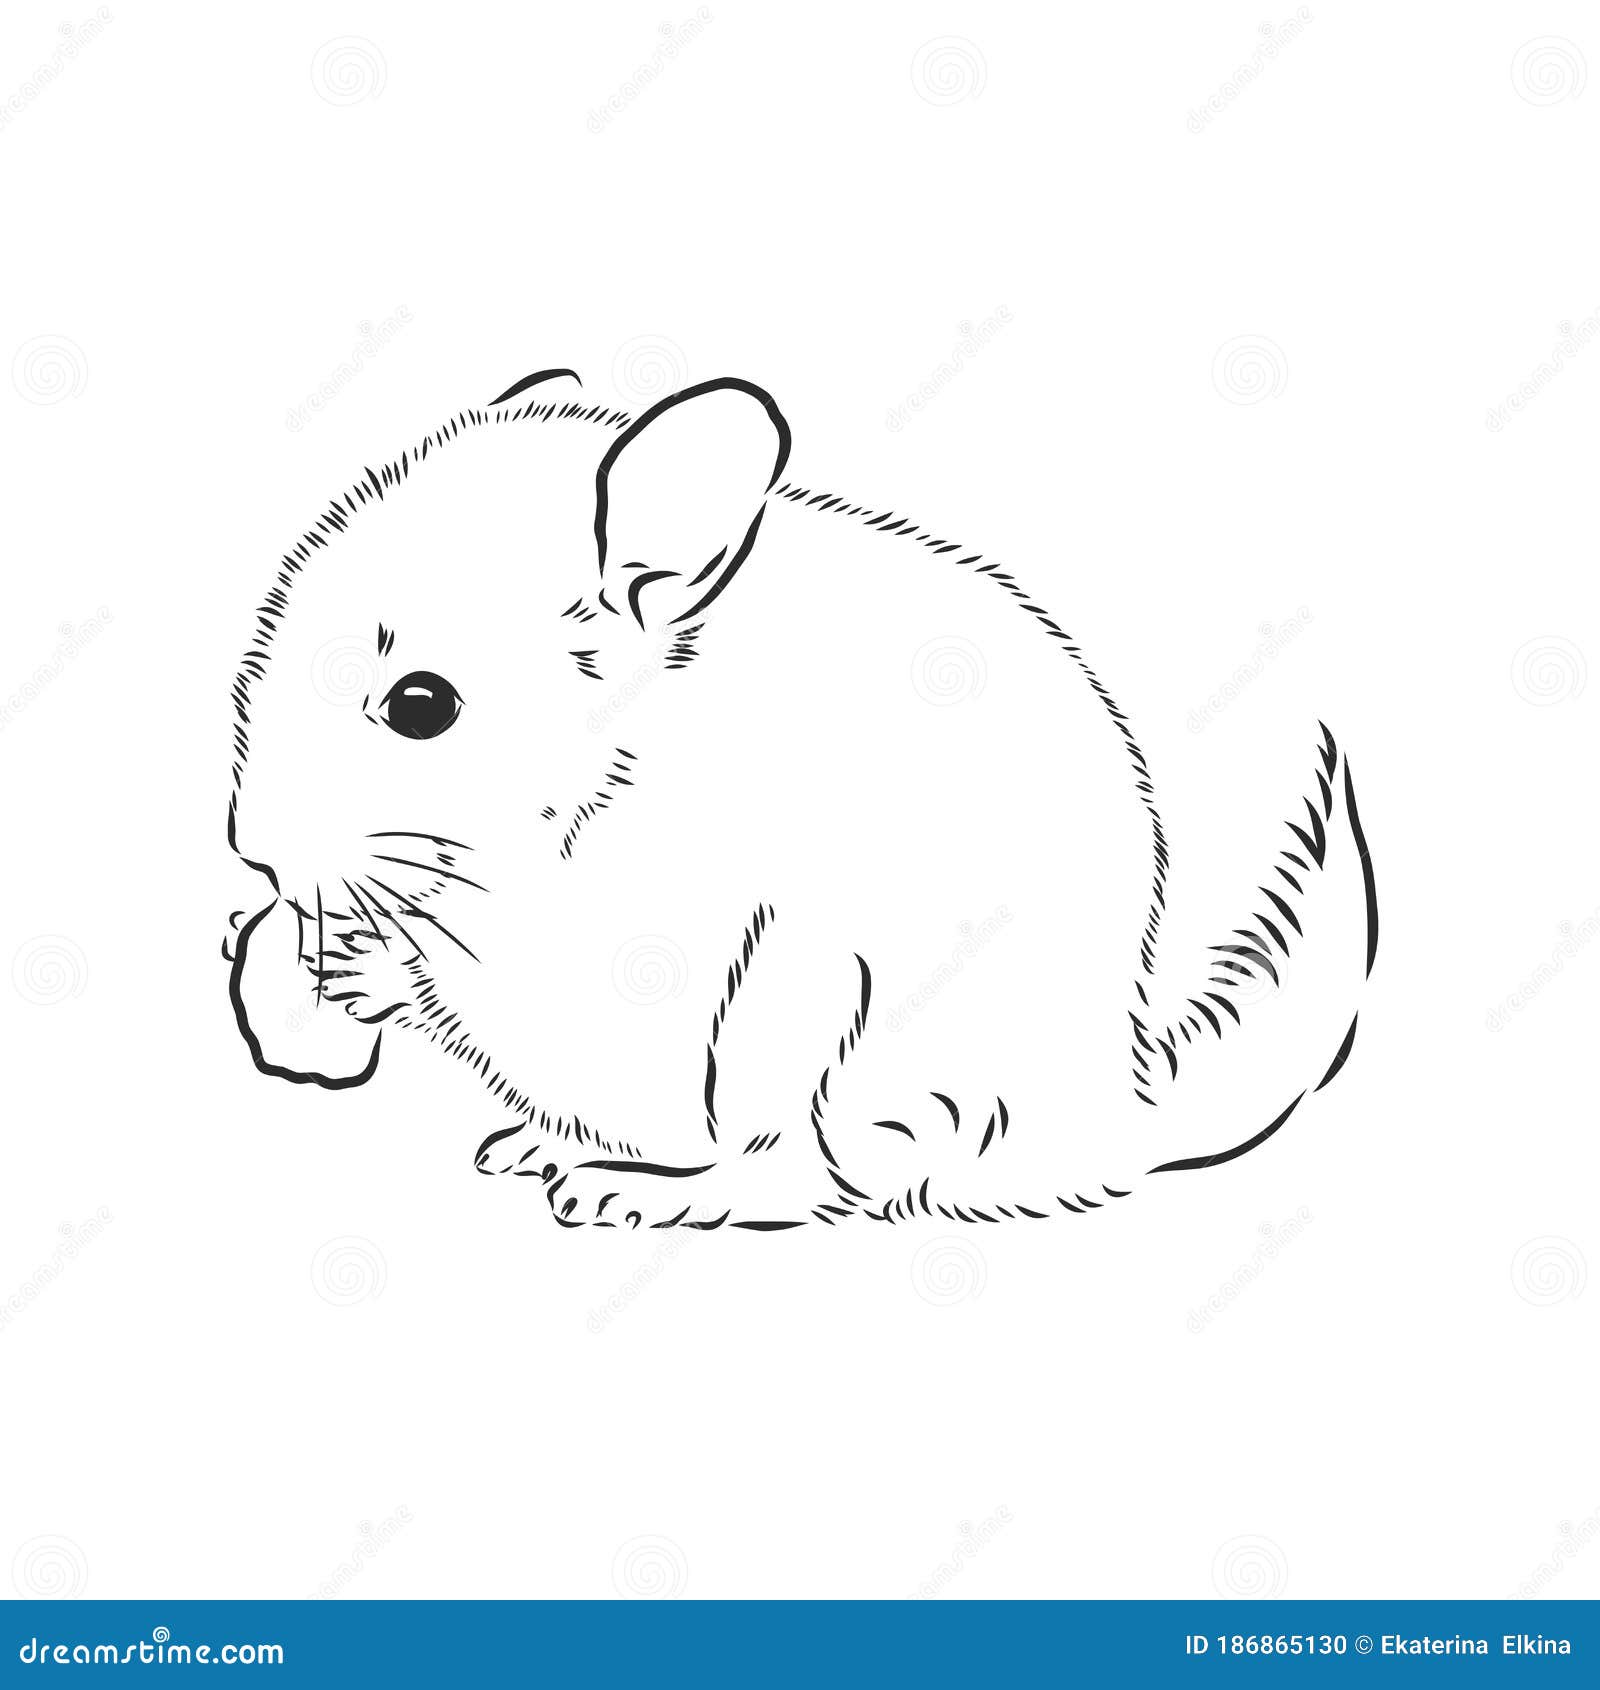 Today's mammal sketch - Chinchilla - 11.15.21 : r/sketches